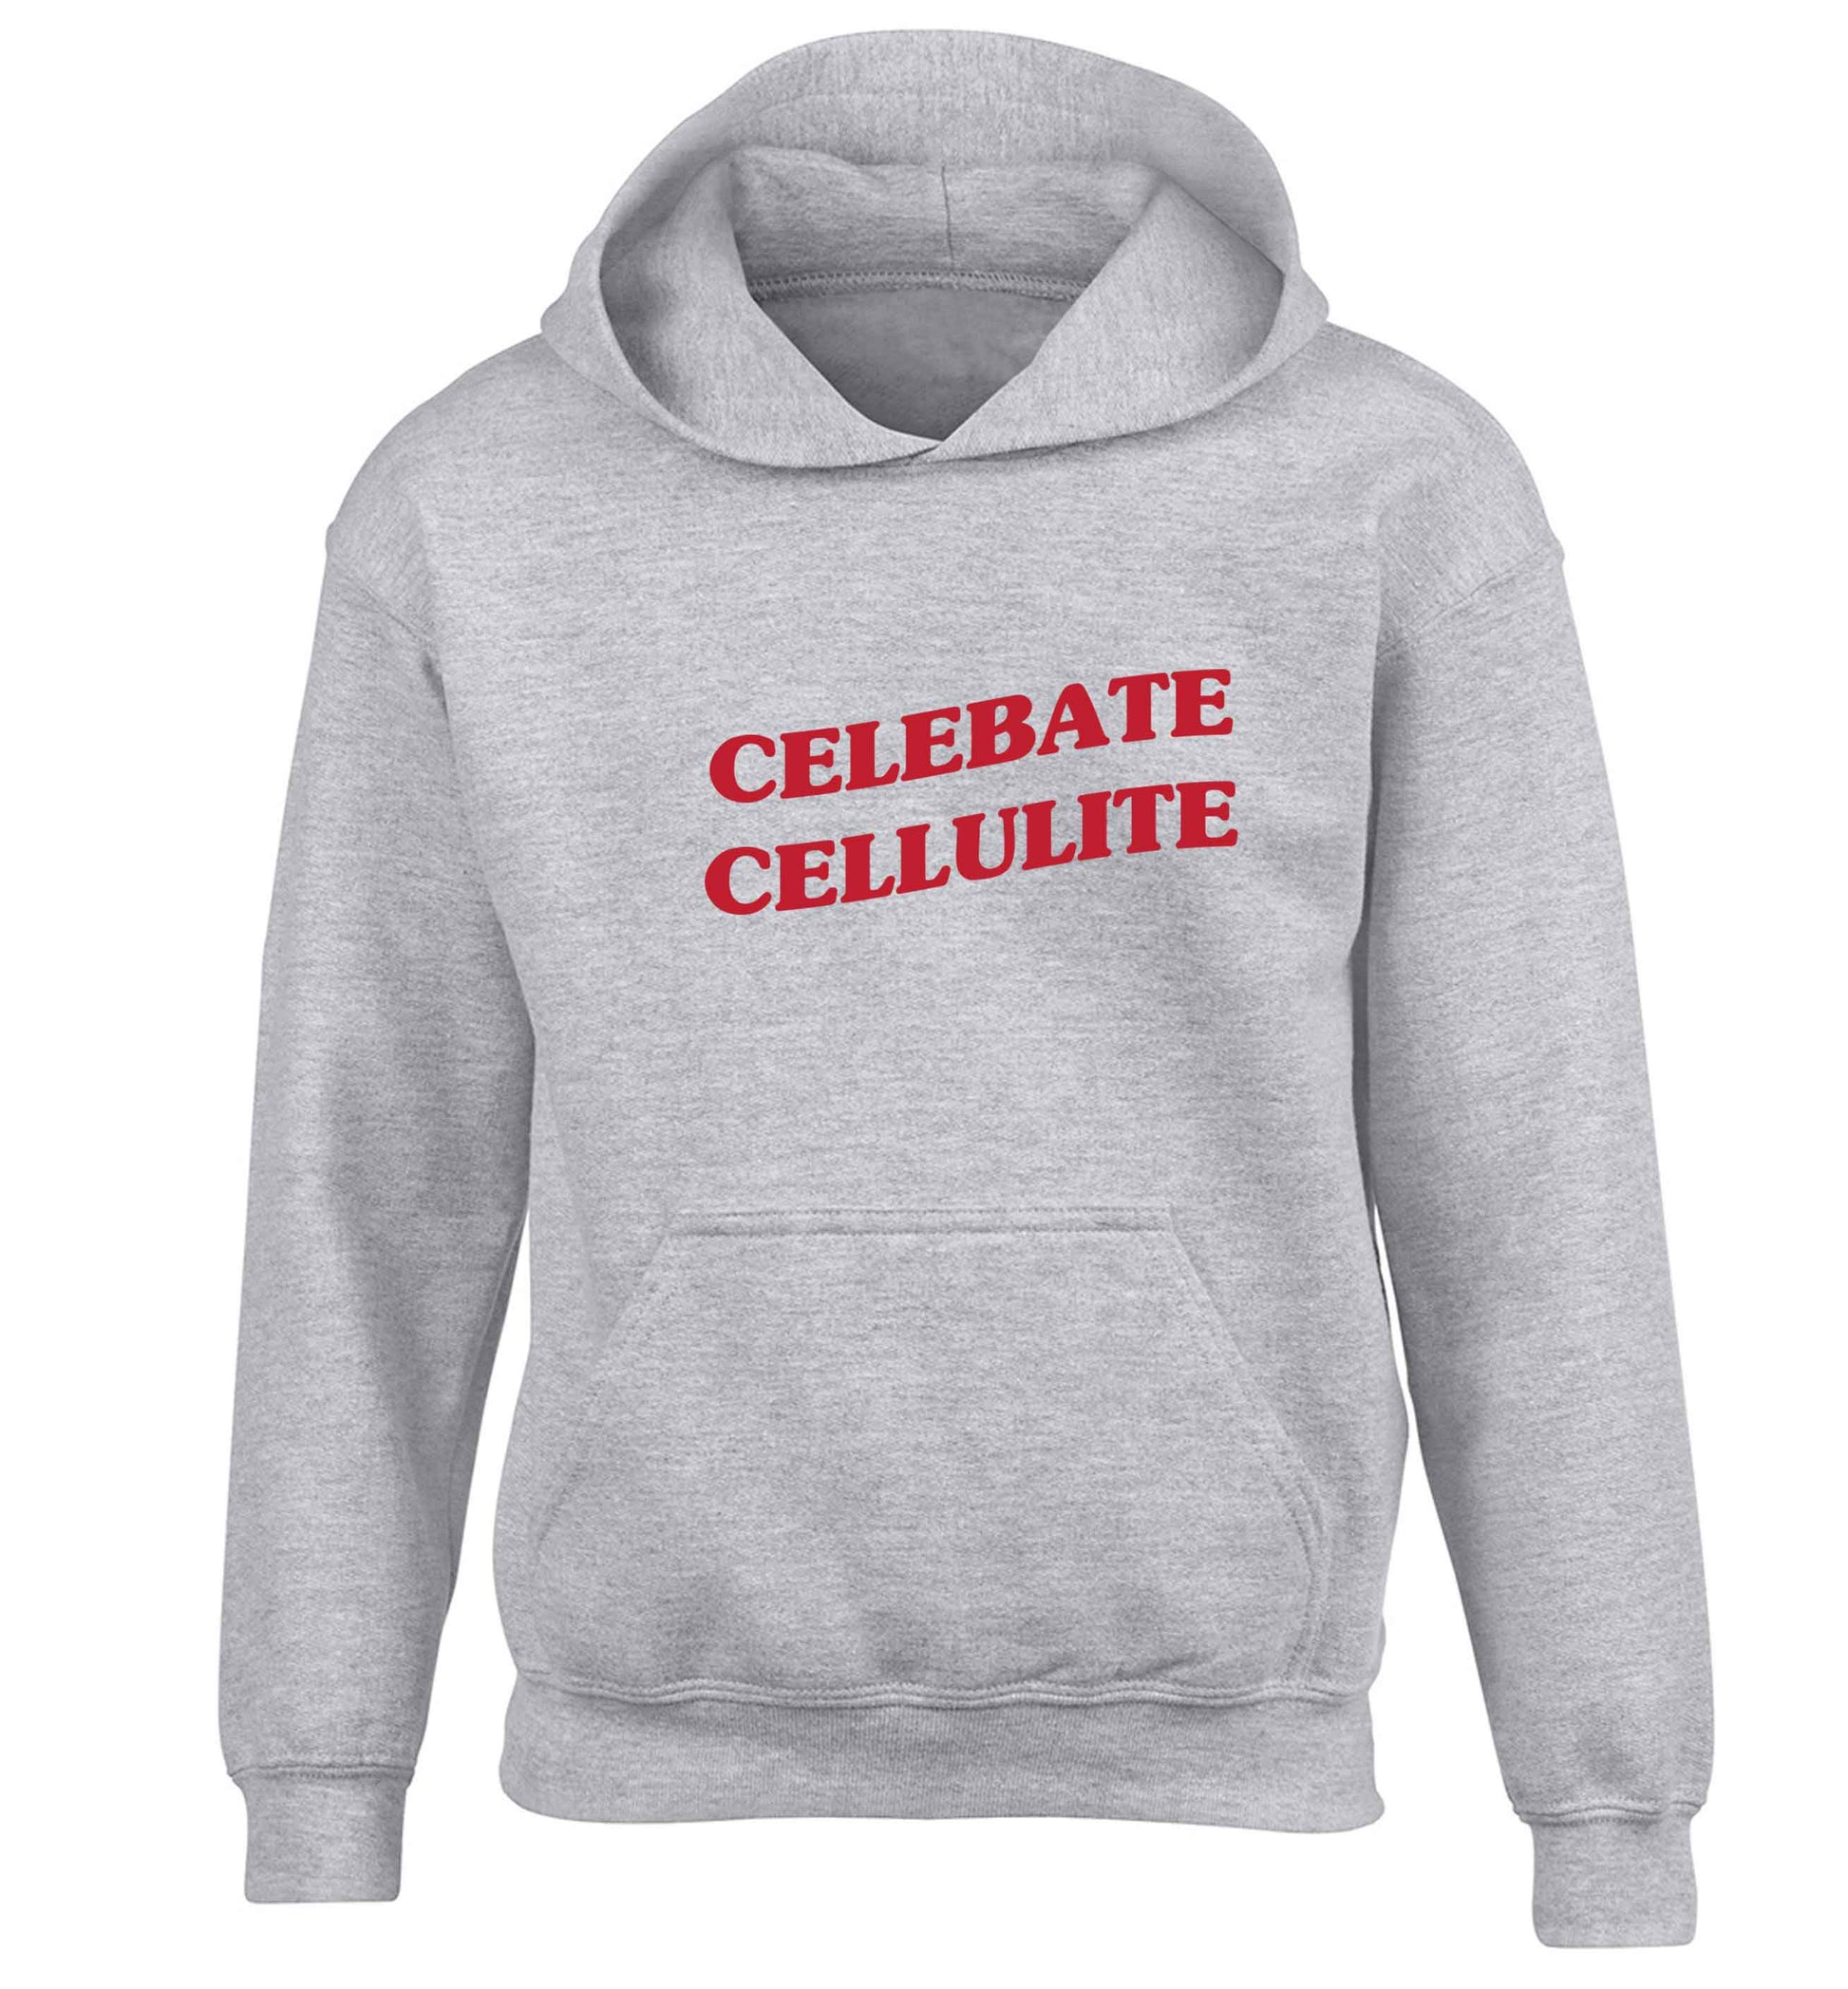 Celebrate cellulite children's grey hoodie 12-13 Years